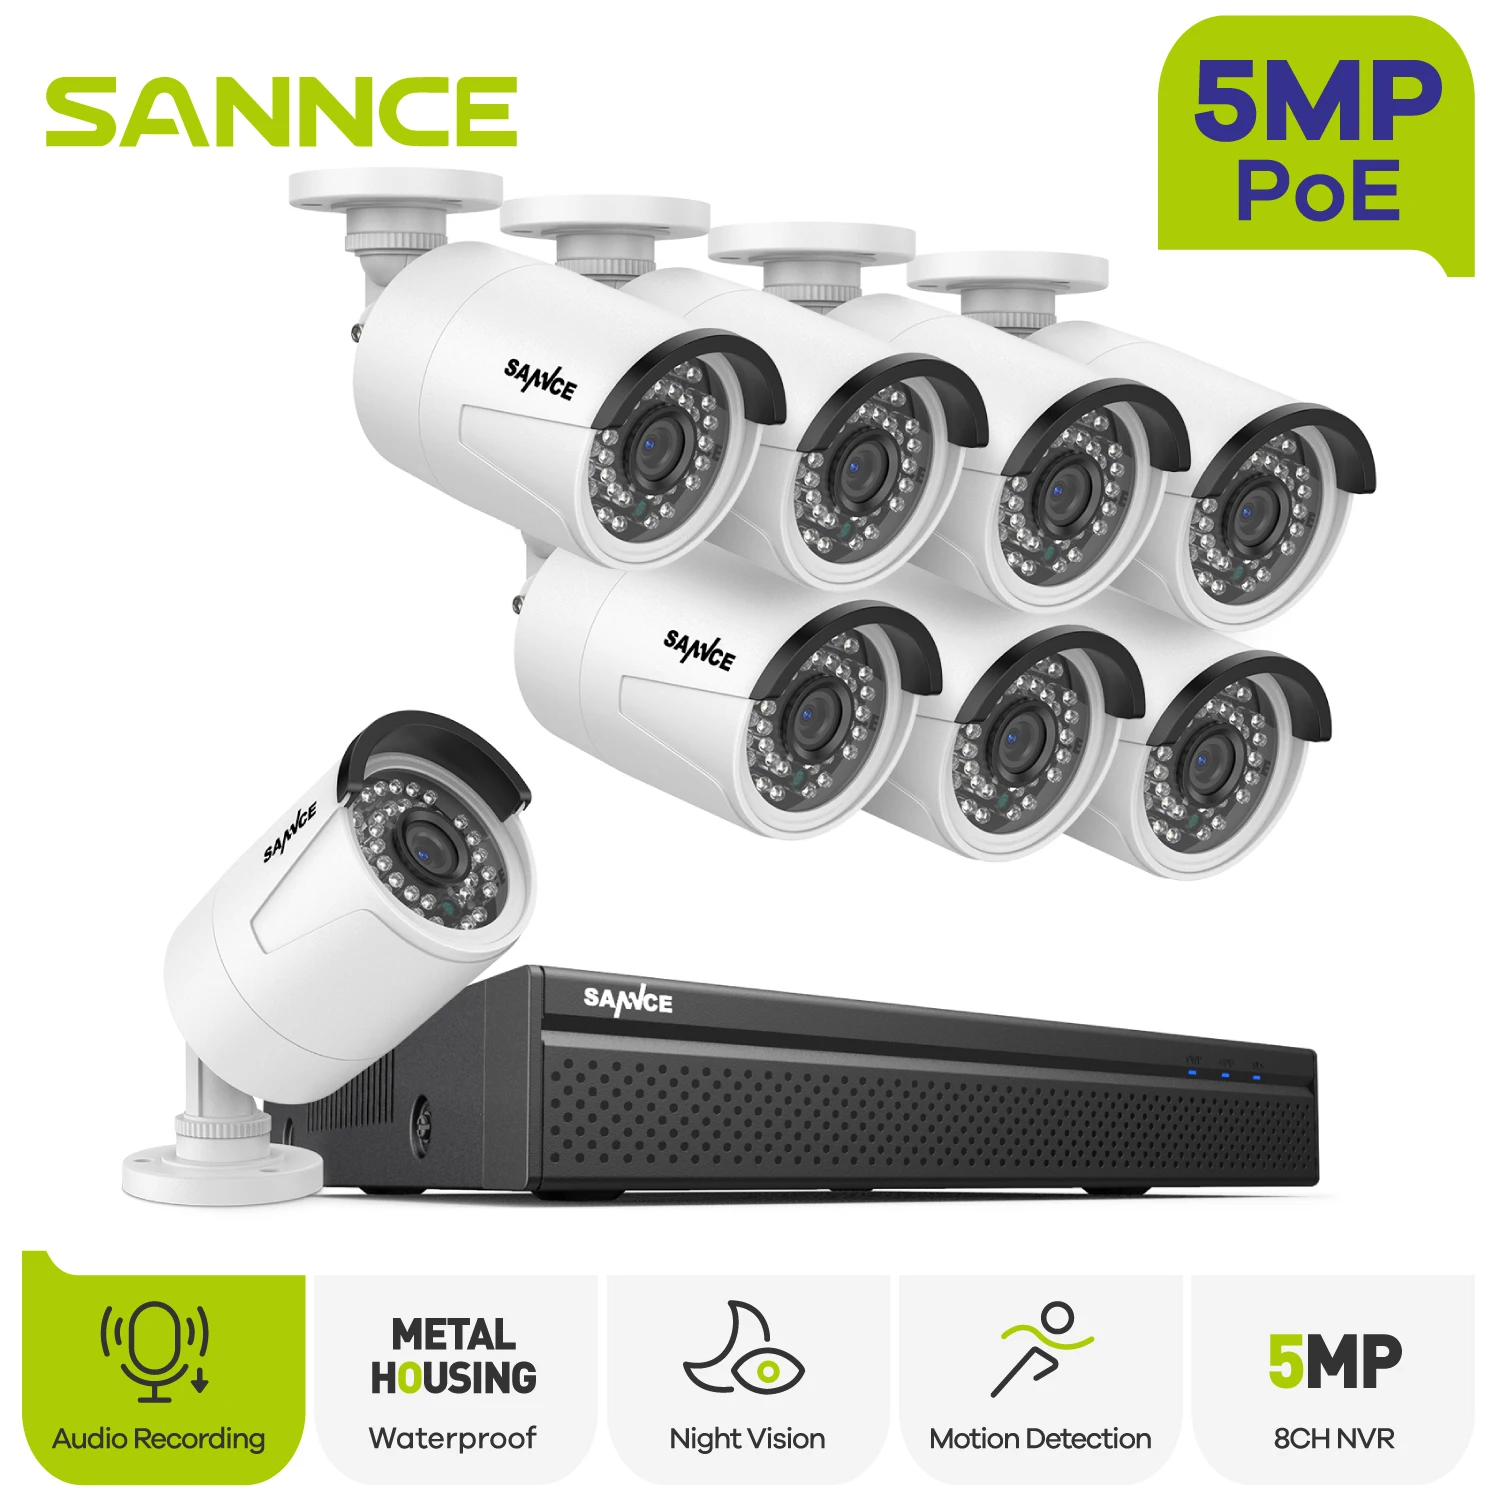 Tanio SANNCE 5MP POE kamery do monitoringu System 8CH H.264